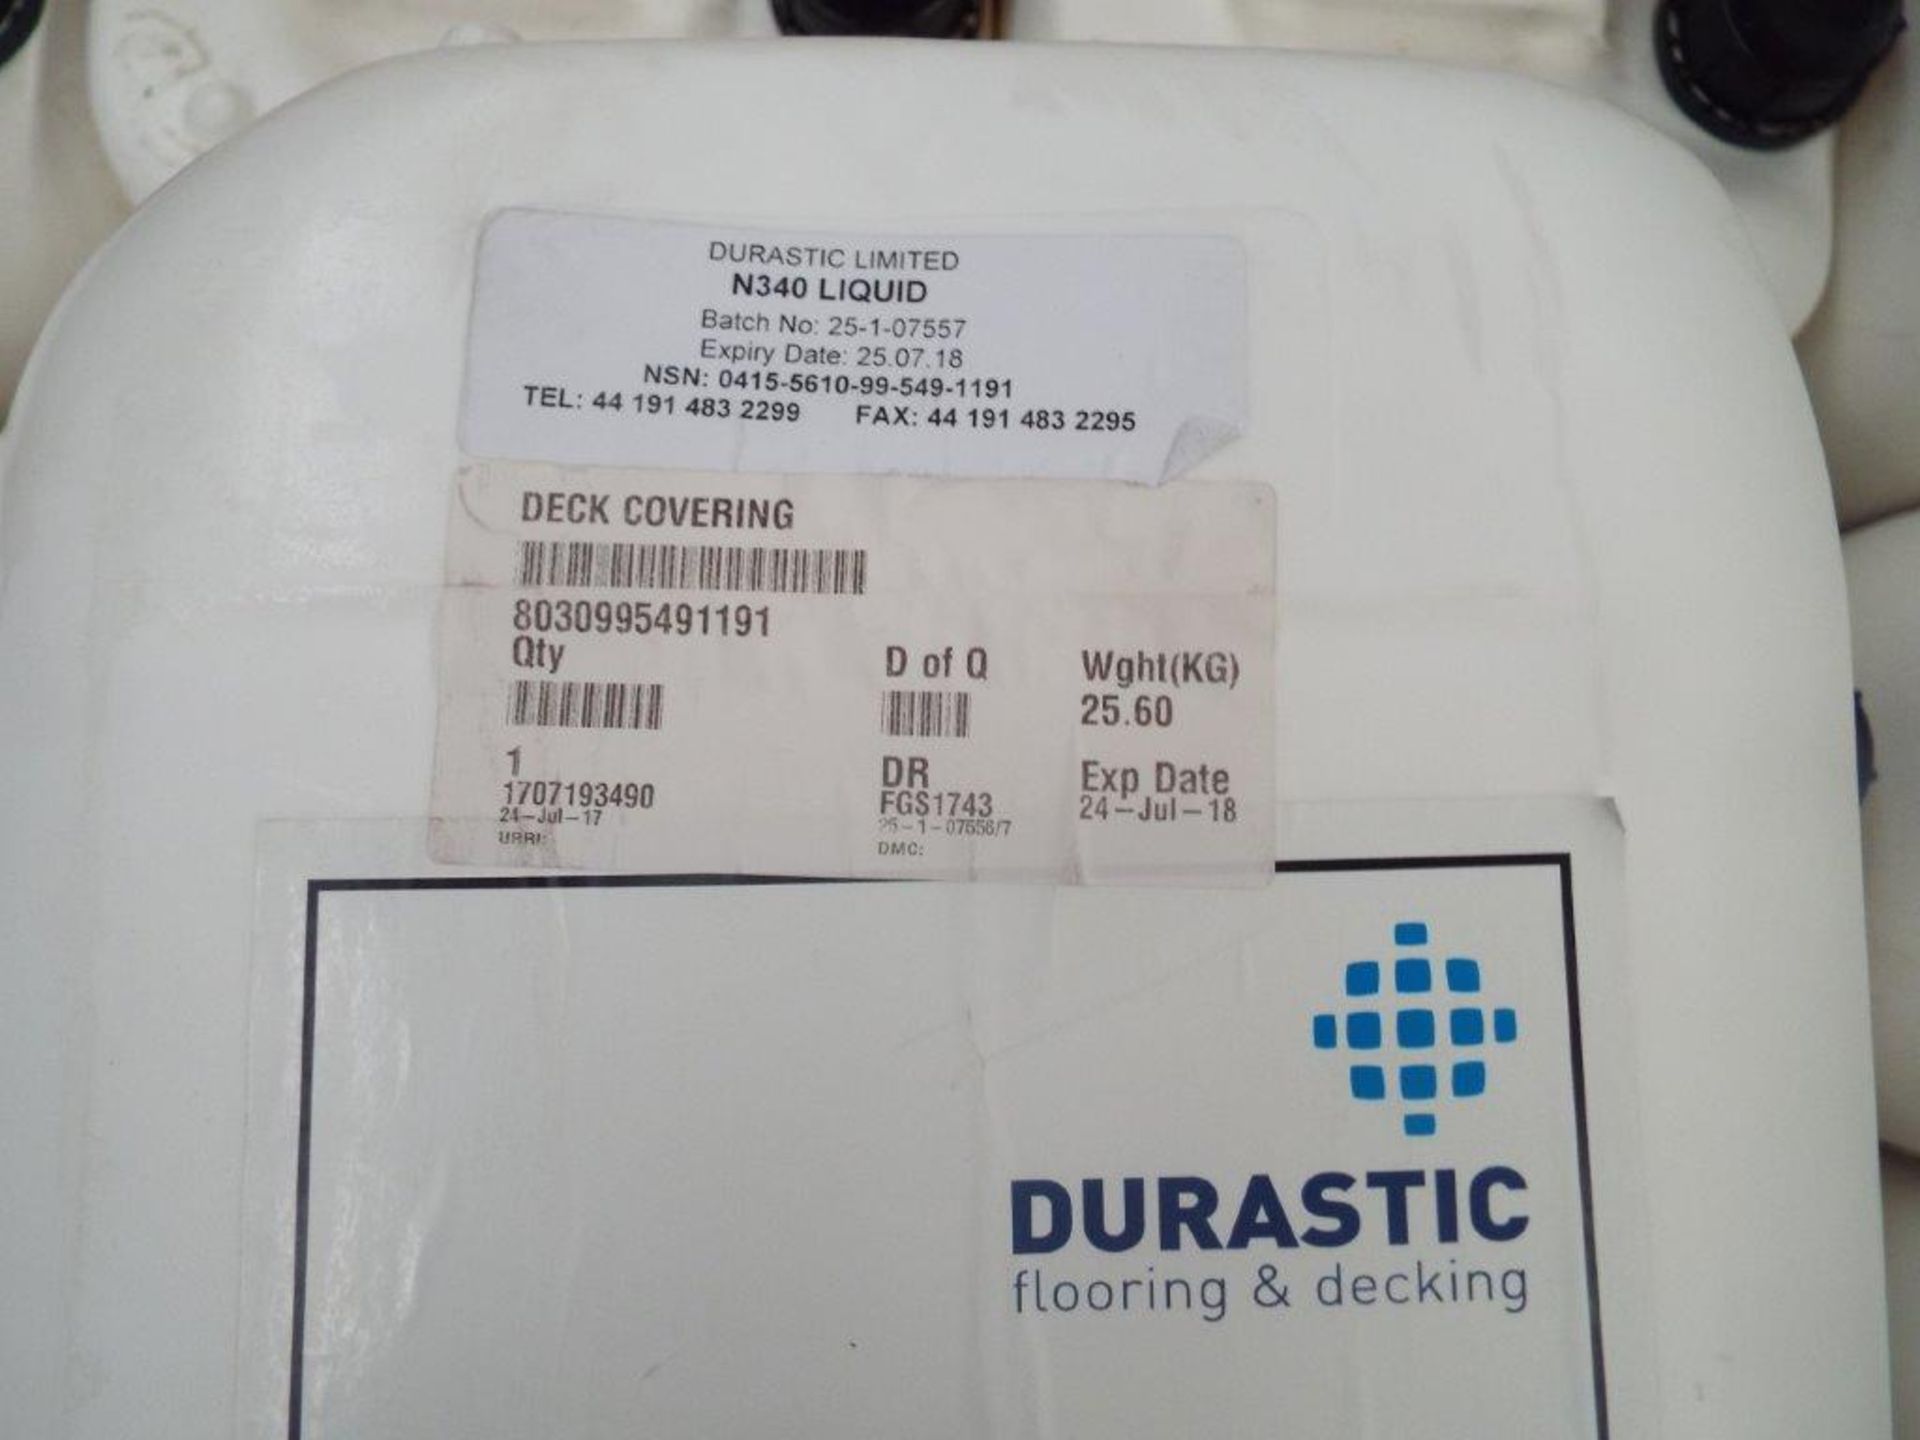 23 x Unissued 25Kg Tubs of Durastic N340 Deck Covering - Image 2 of 3